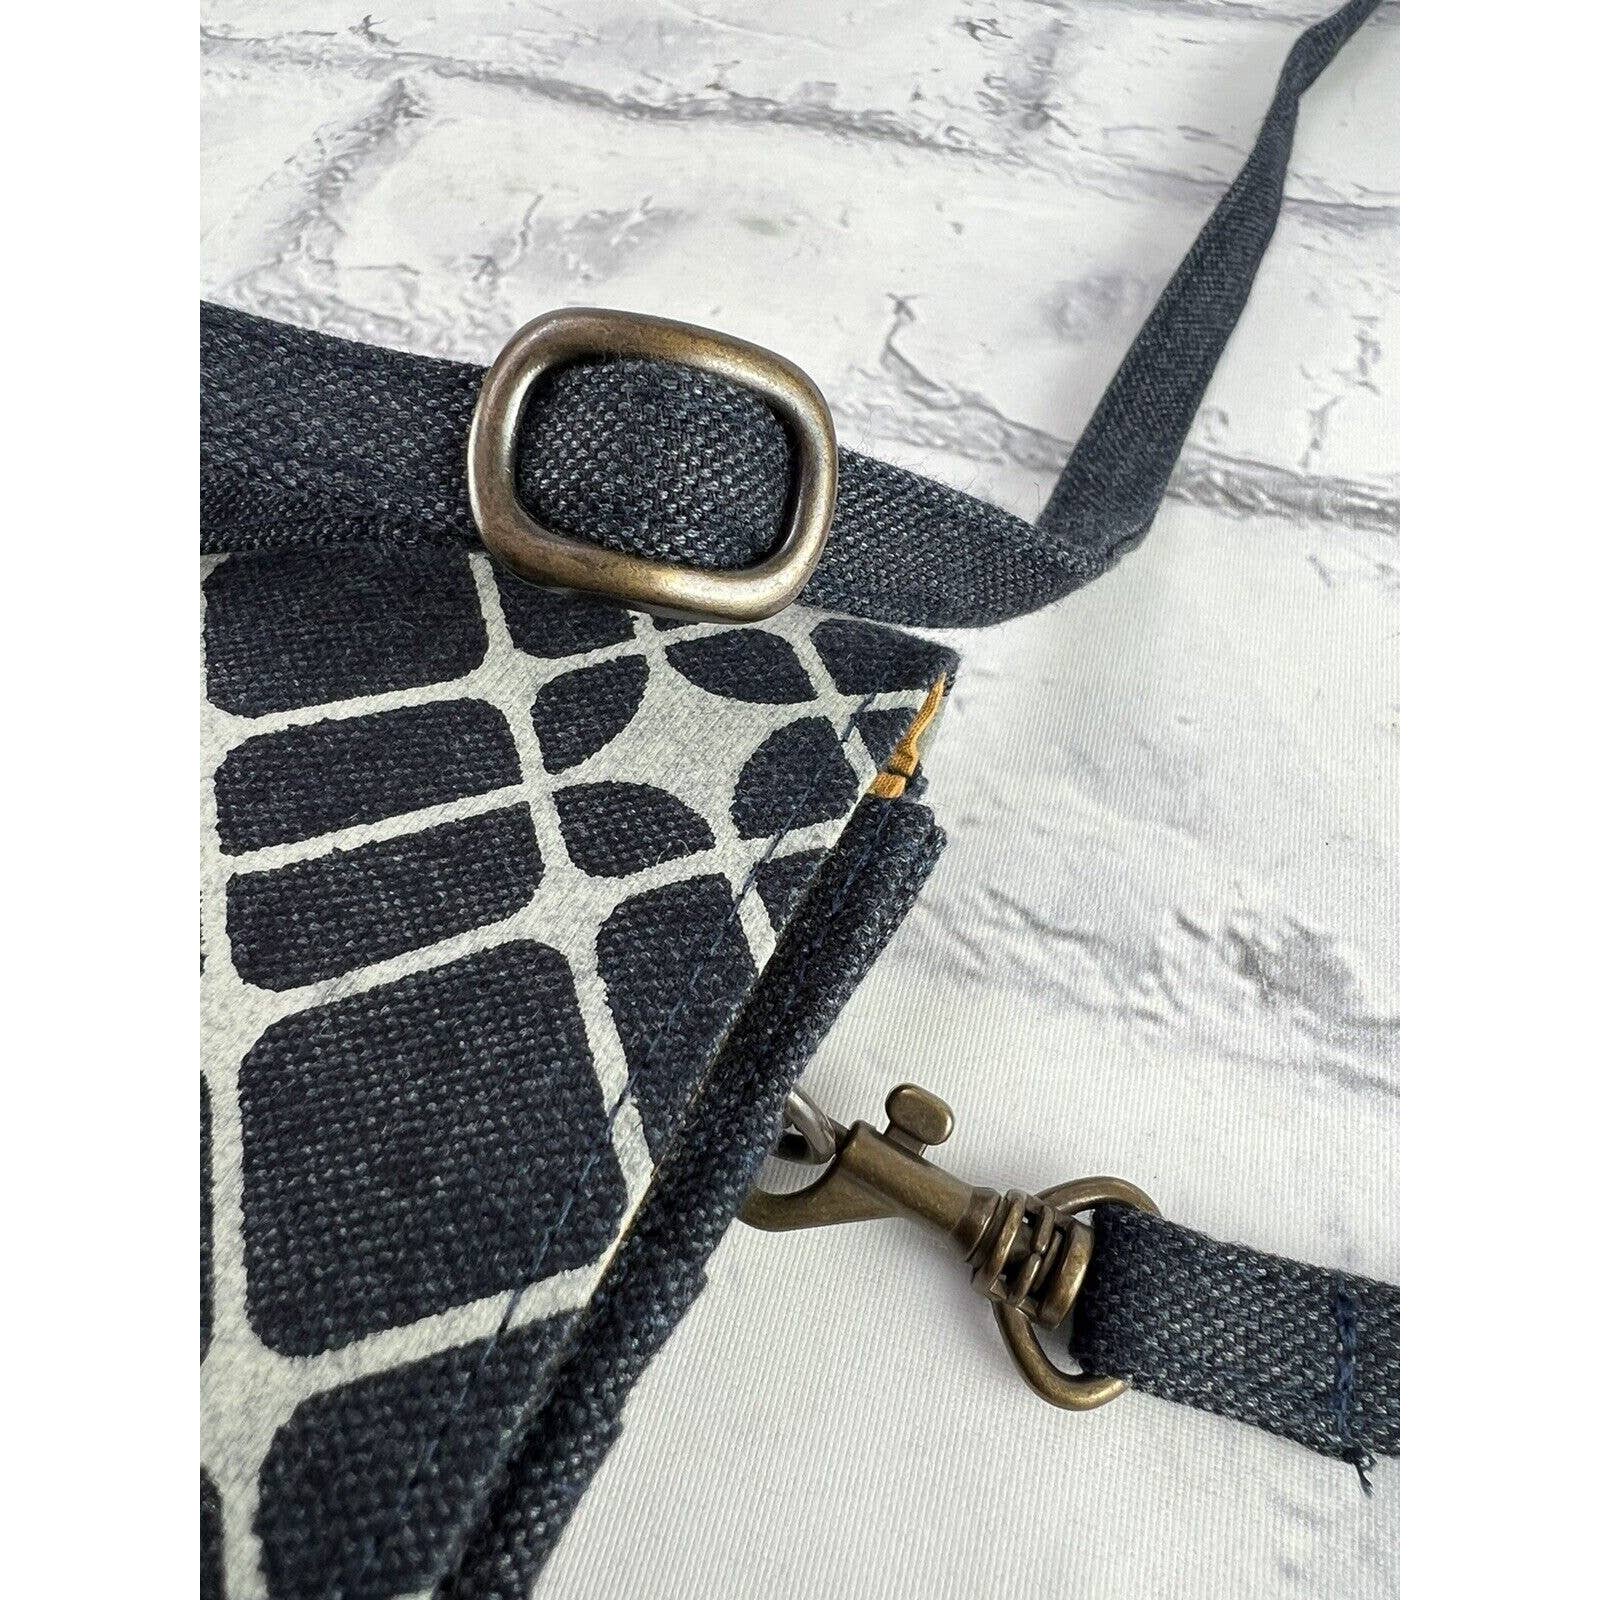 Malia Designs Crossbody Bag Fair Trade Cotton Canvas Magnetic Closure Blue Denim